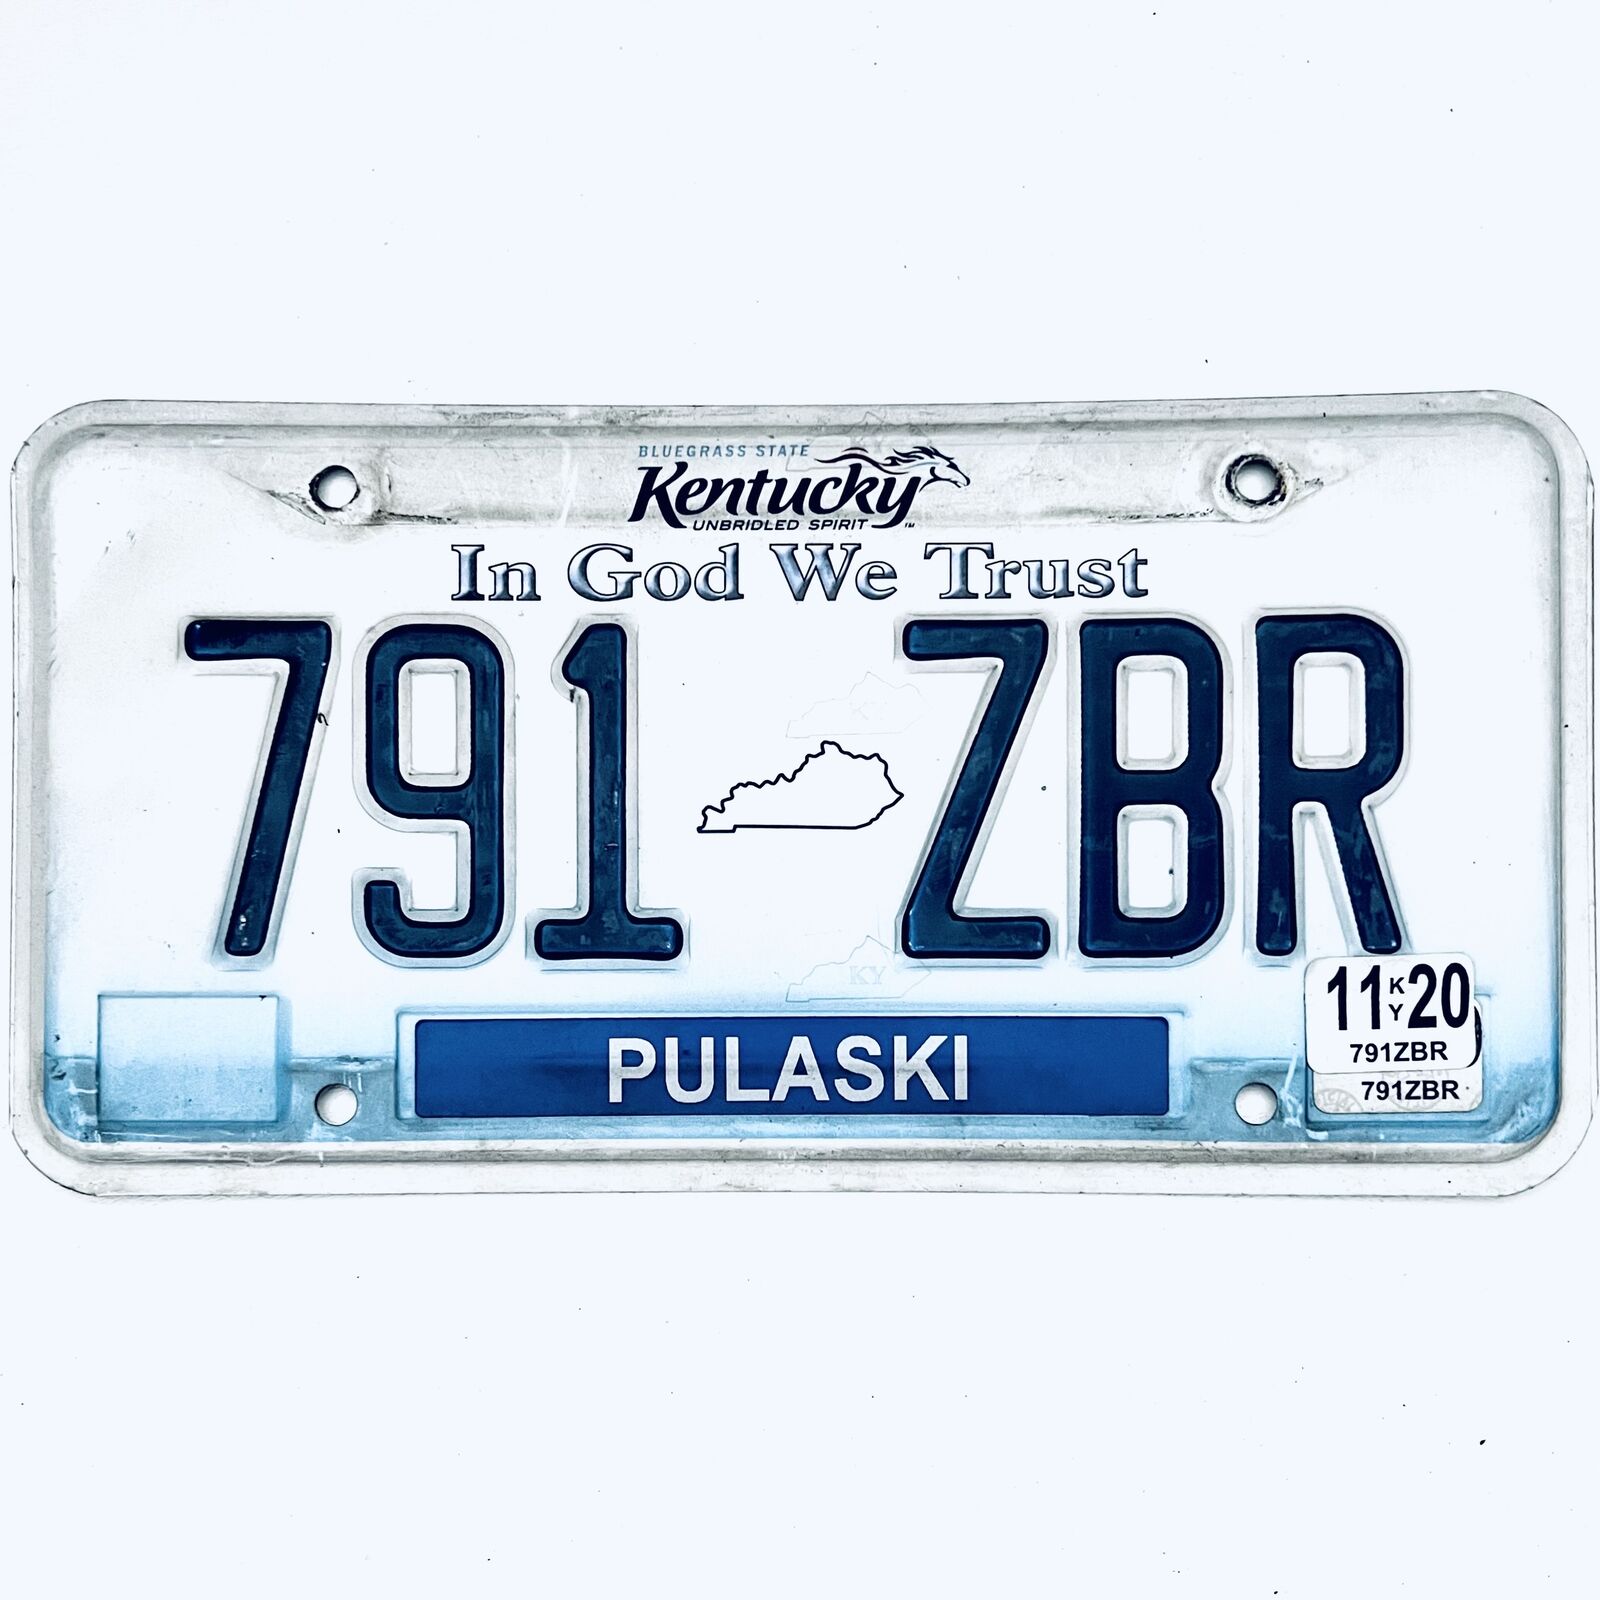 2020 United States Kentucky Pulaski County Passenger License Plate 791 ZBR